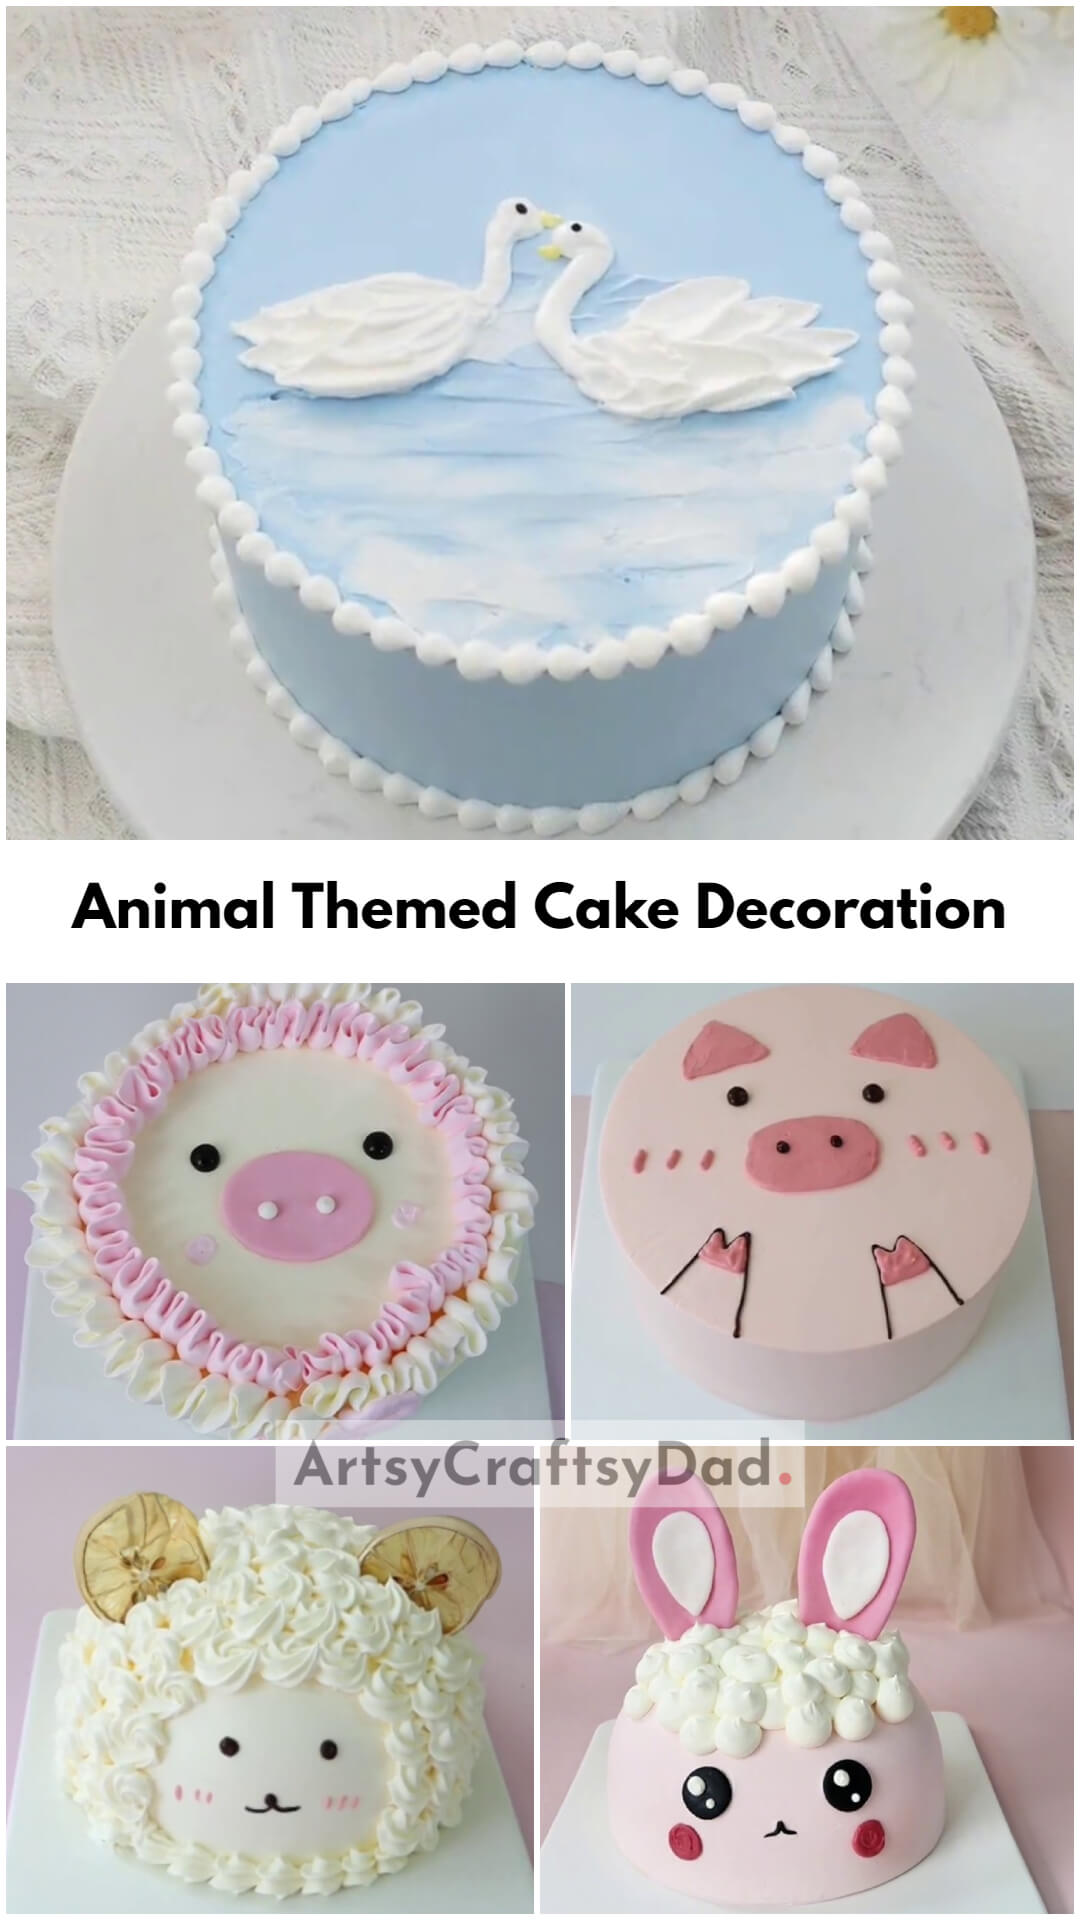 Animal Themed Cake Decoration Ideas For Kids Birthday